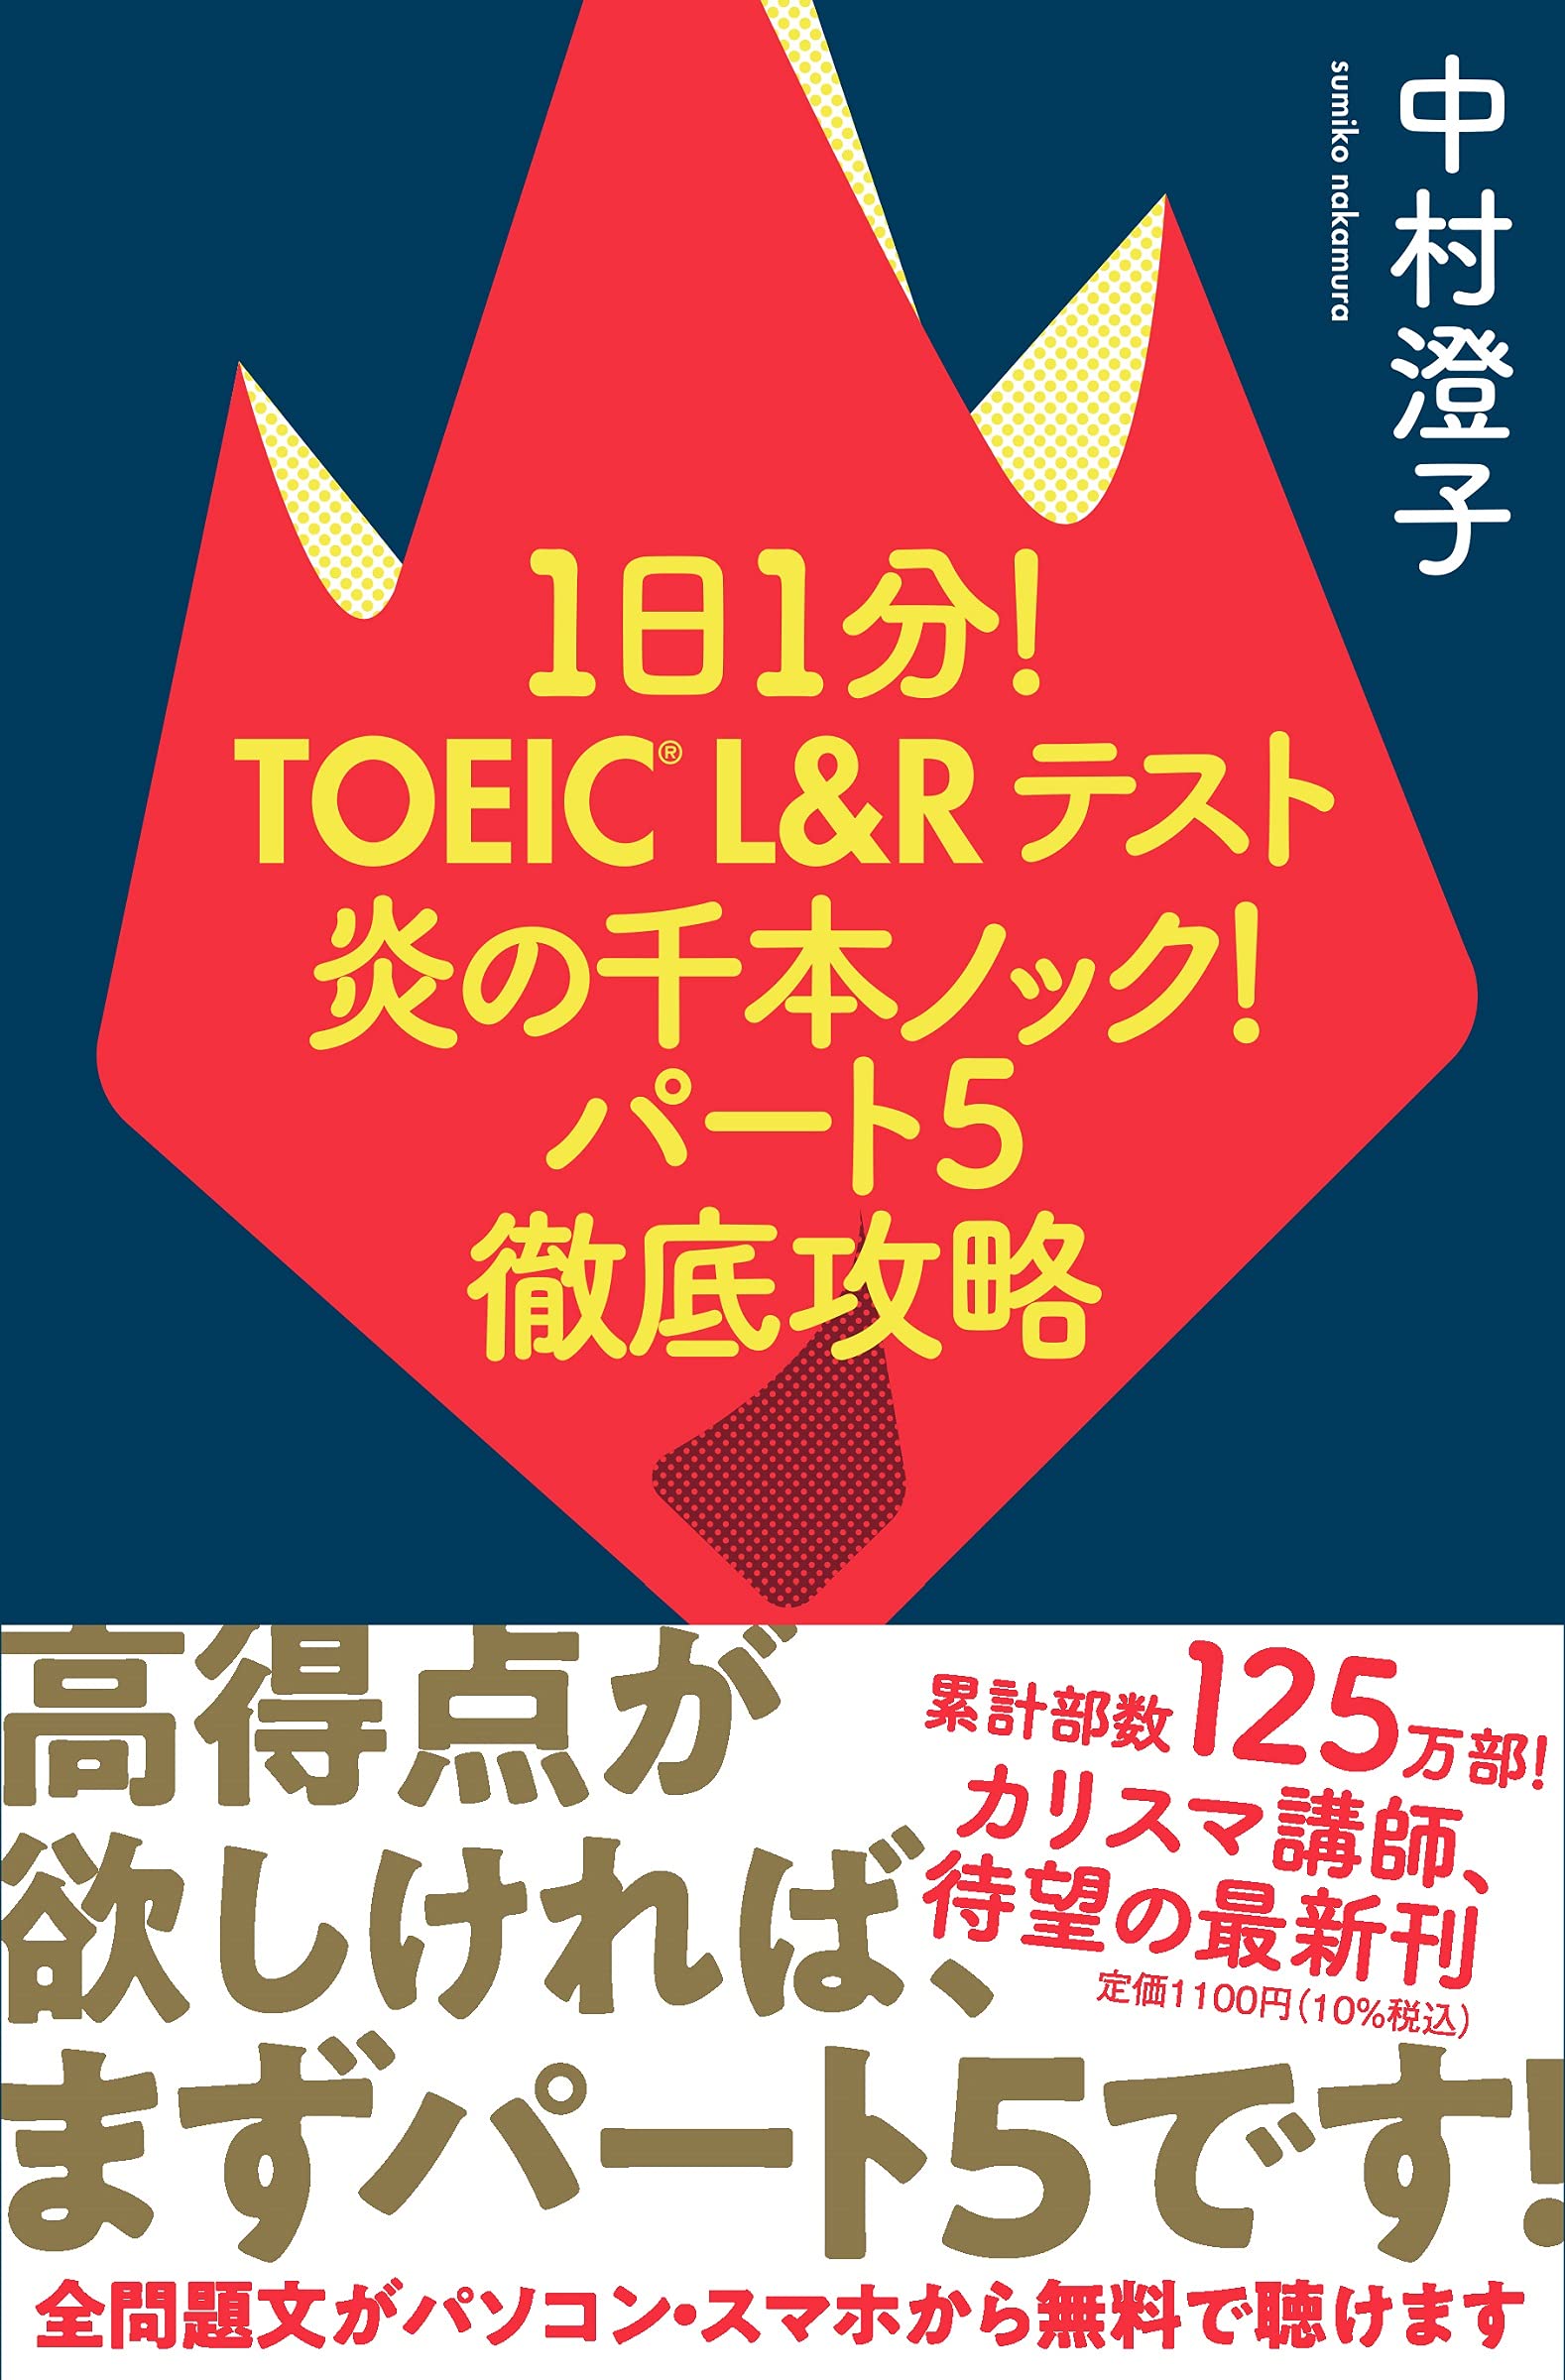 Toeic L Rテスト 炎の千本ノックシリーズの使用方法 ハルヨン